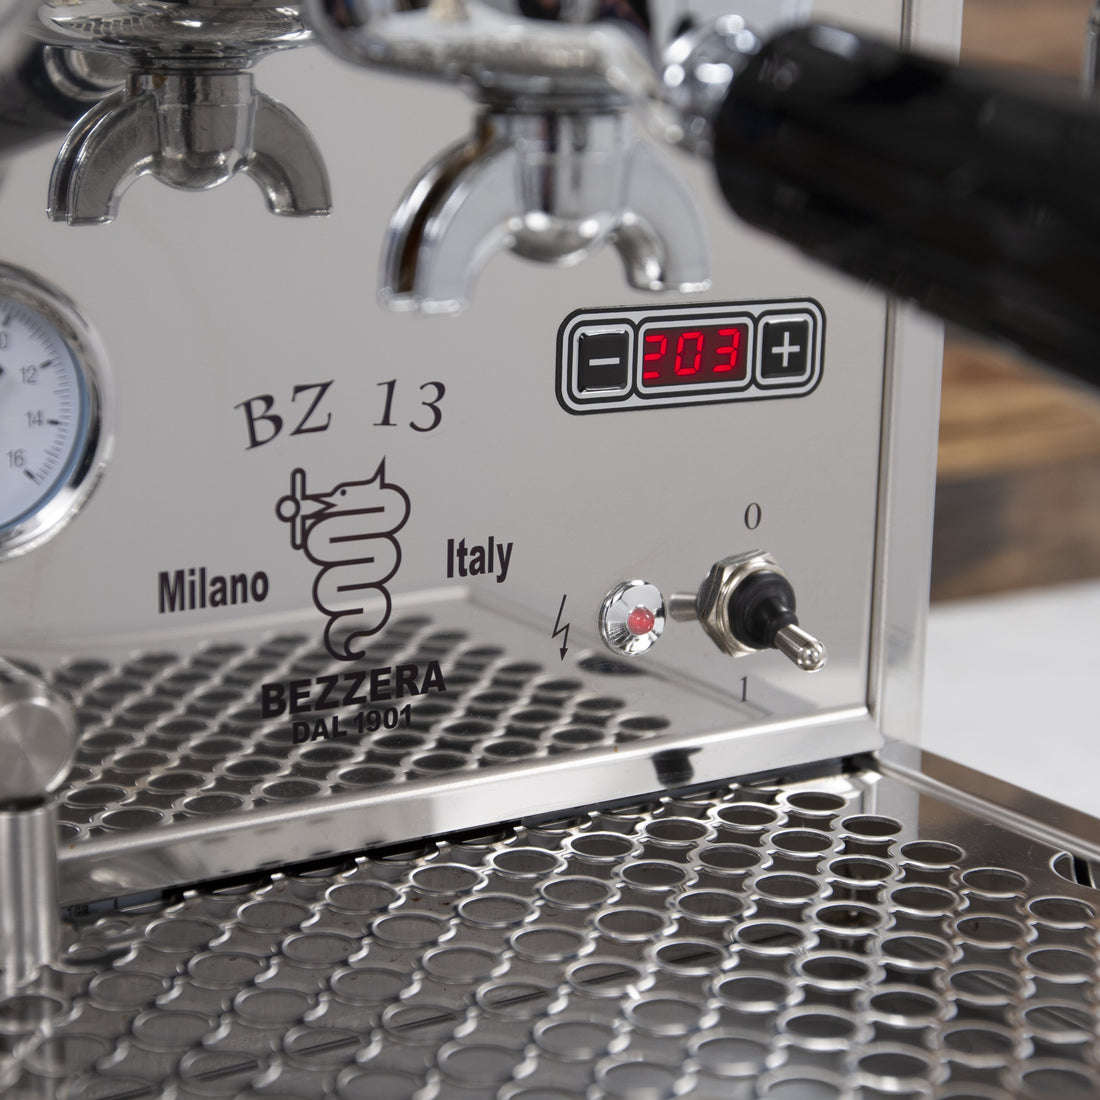 Refurbished Bezzera BZ13 DE Espresso Machine